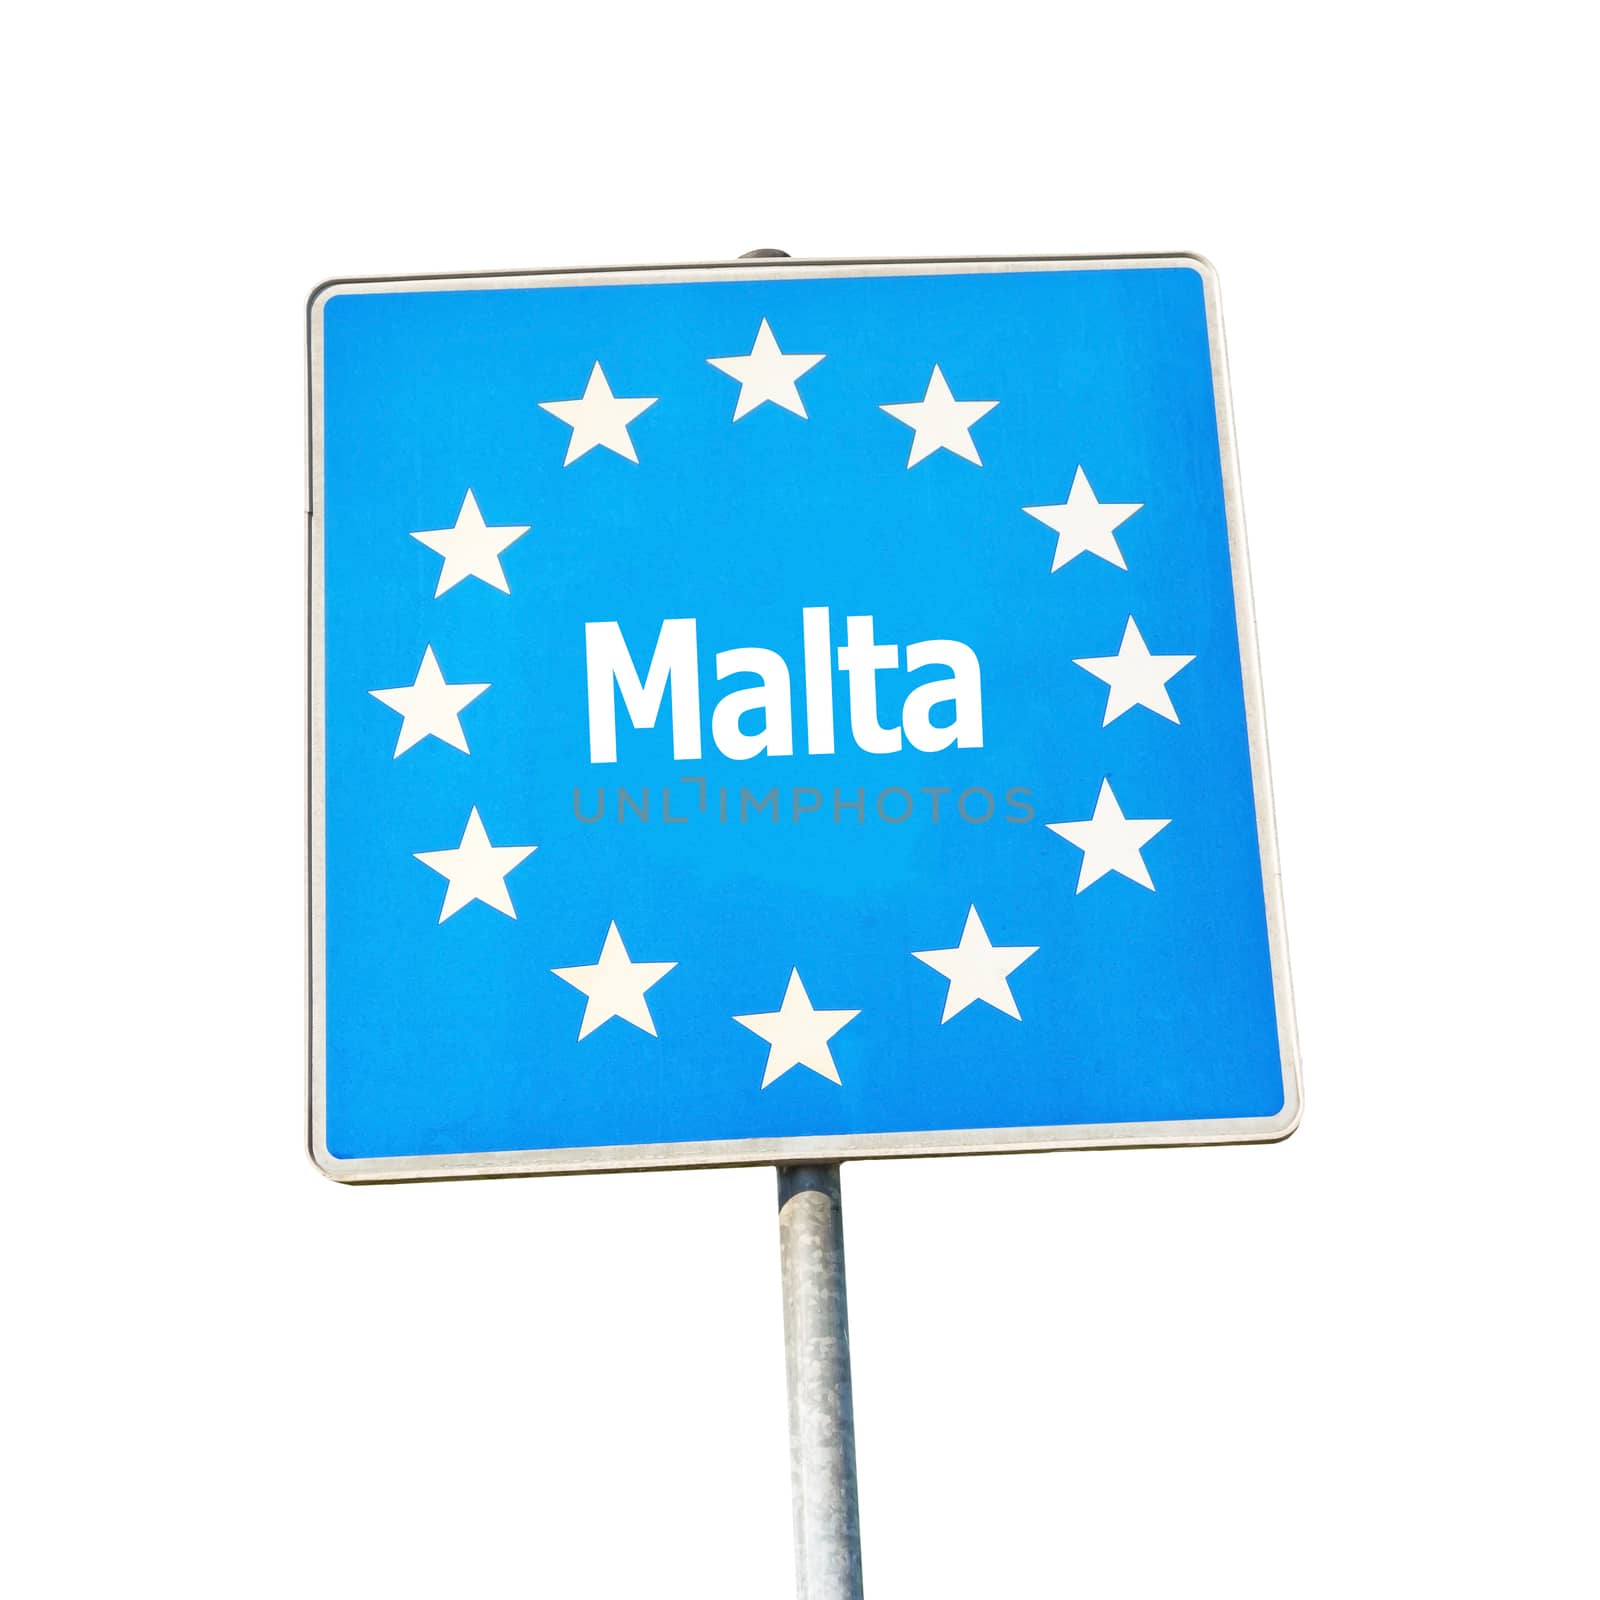 Border sign of malta, europe by aldorado